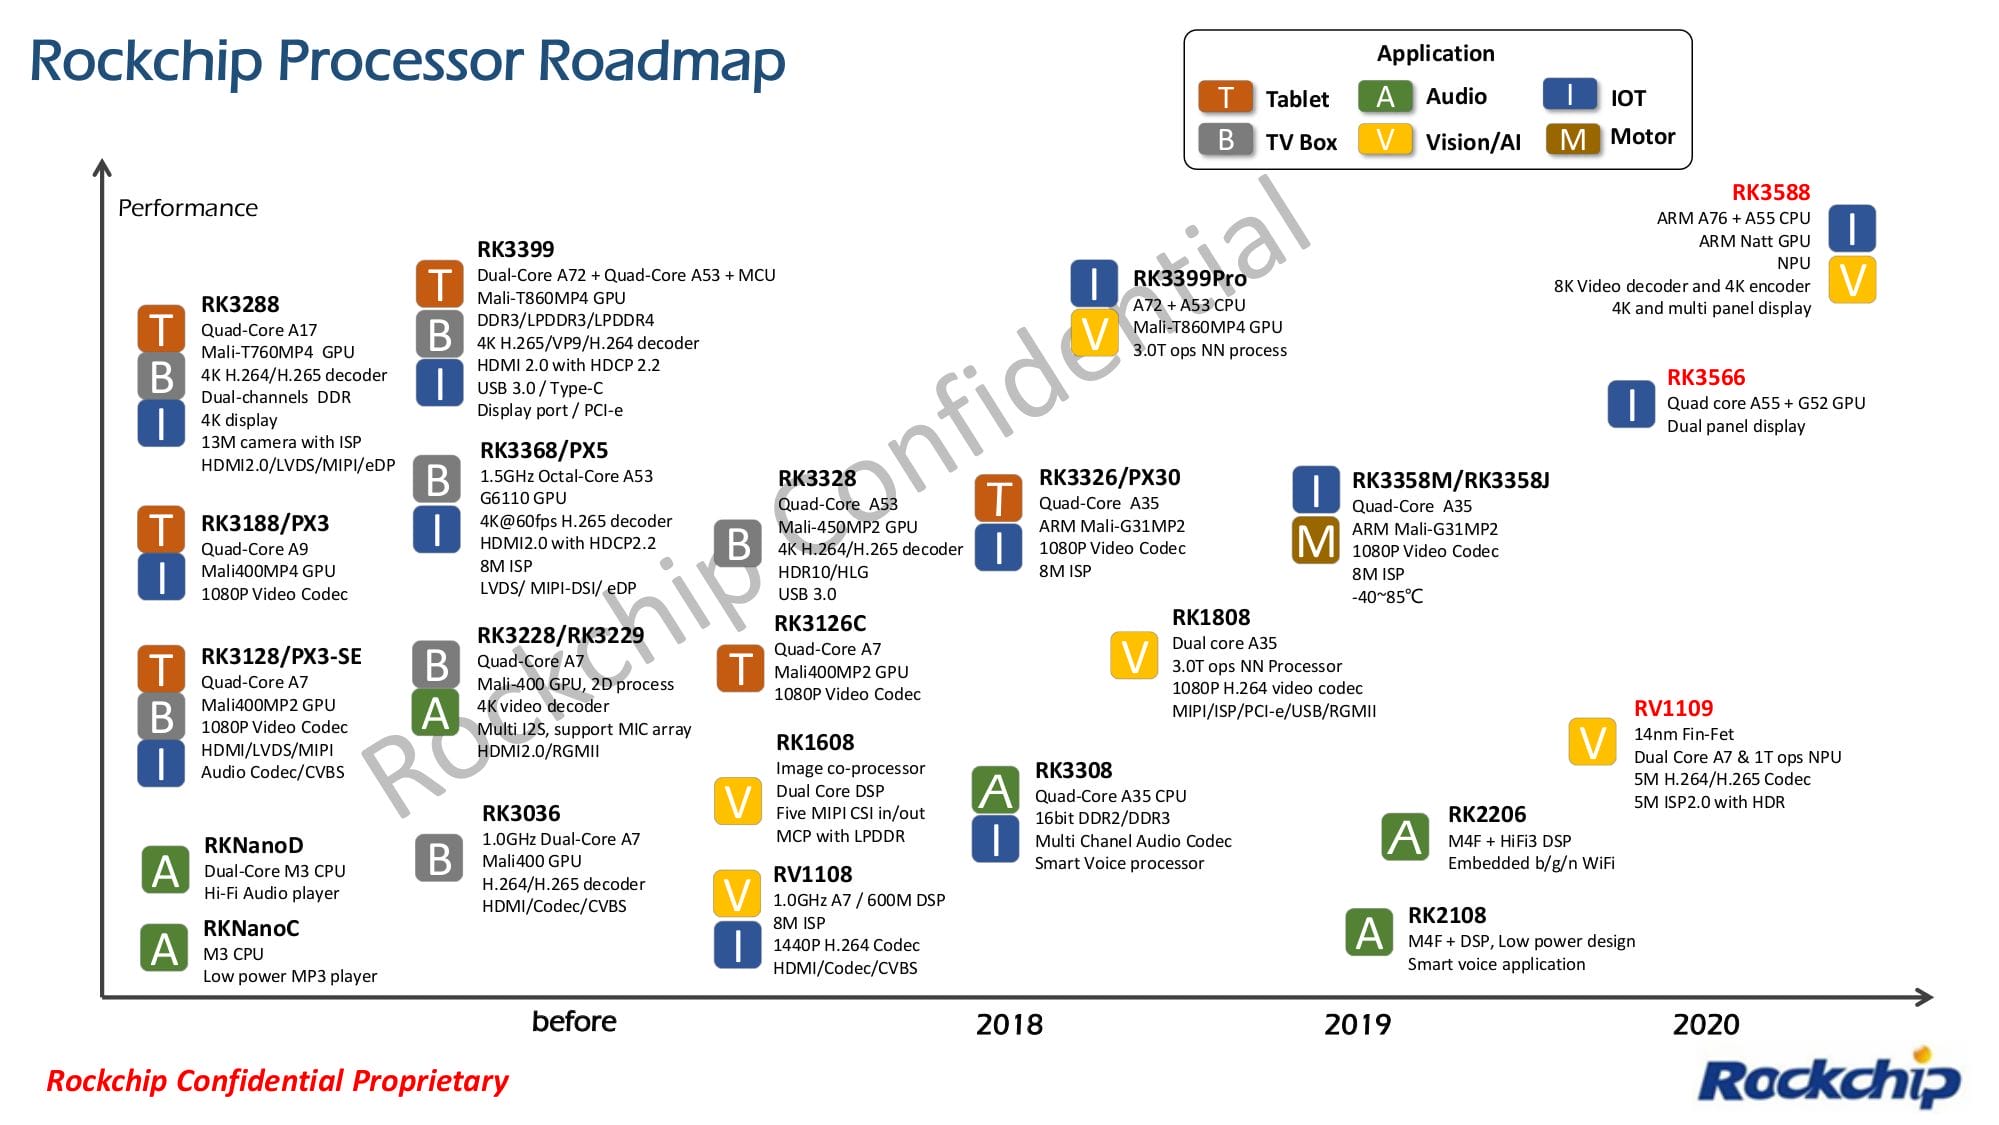 Rockchip Processor Roadmap 2020